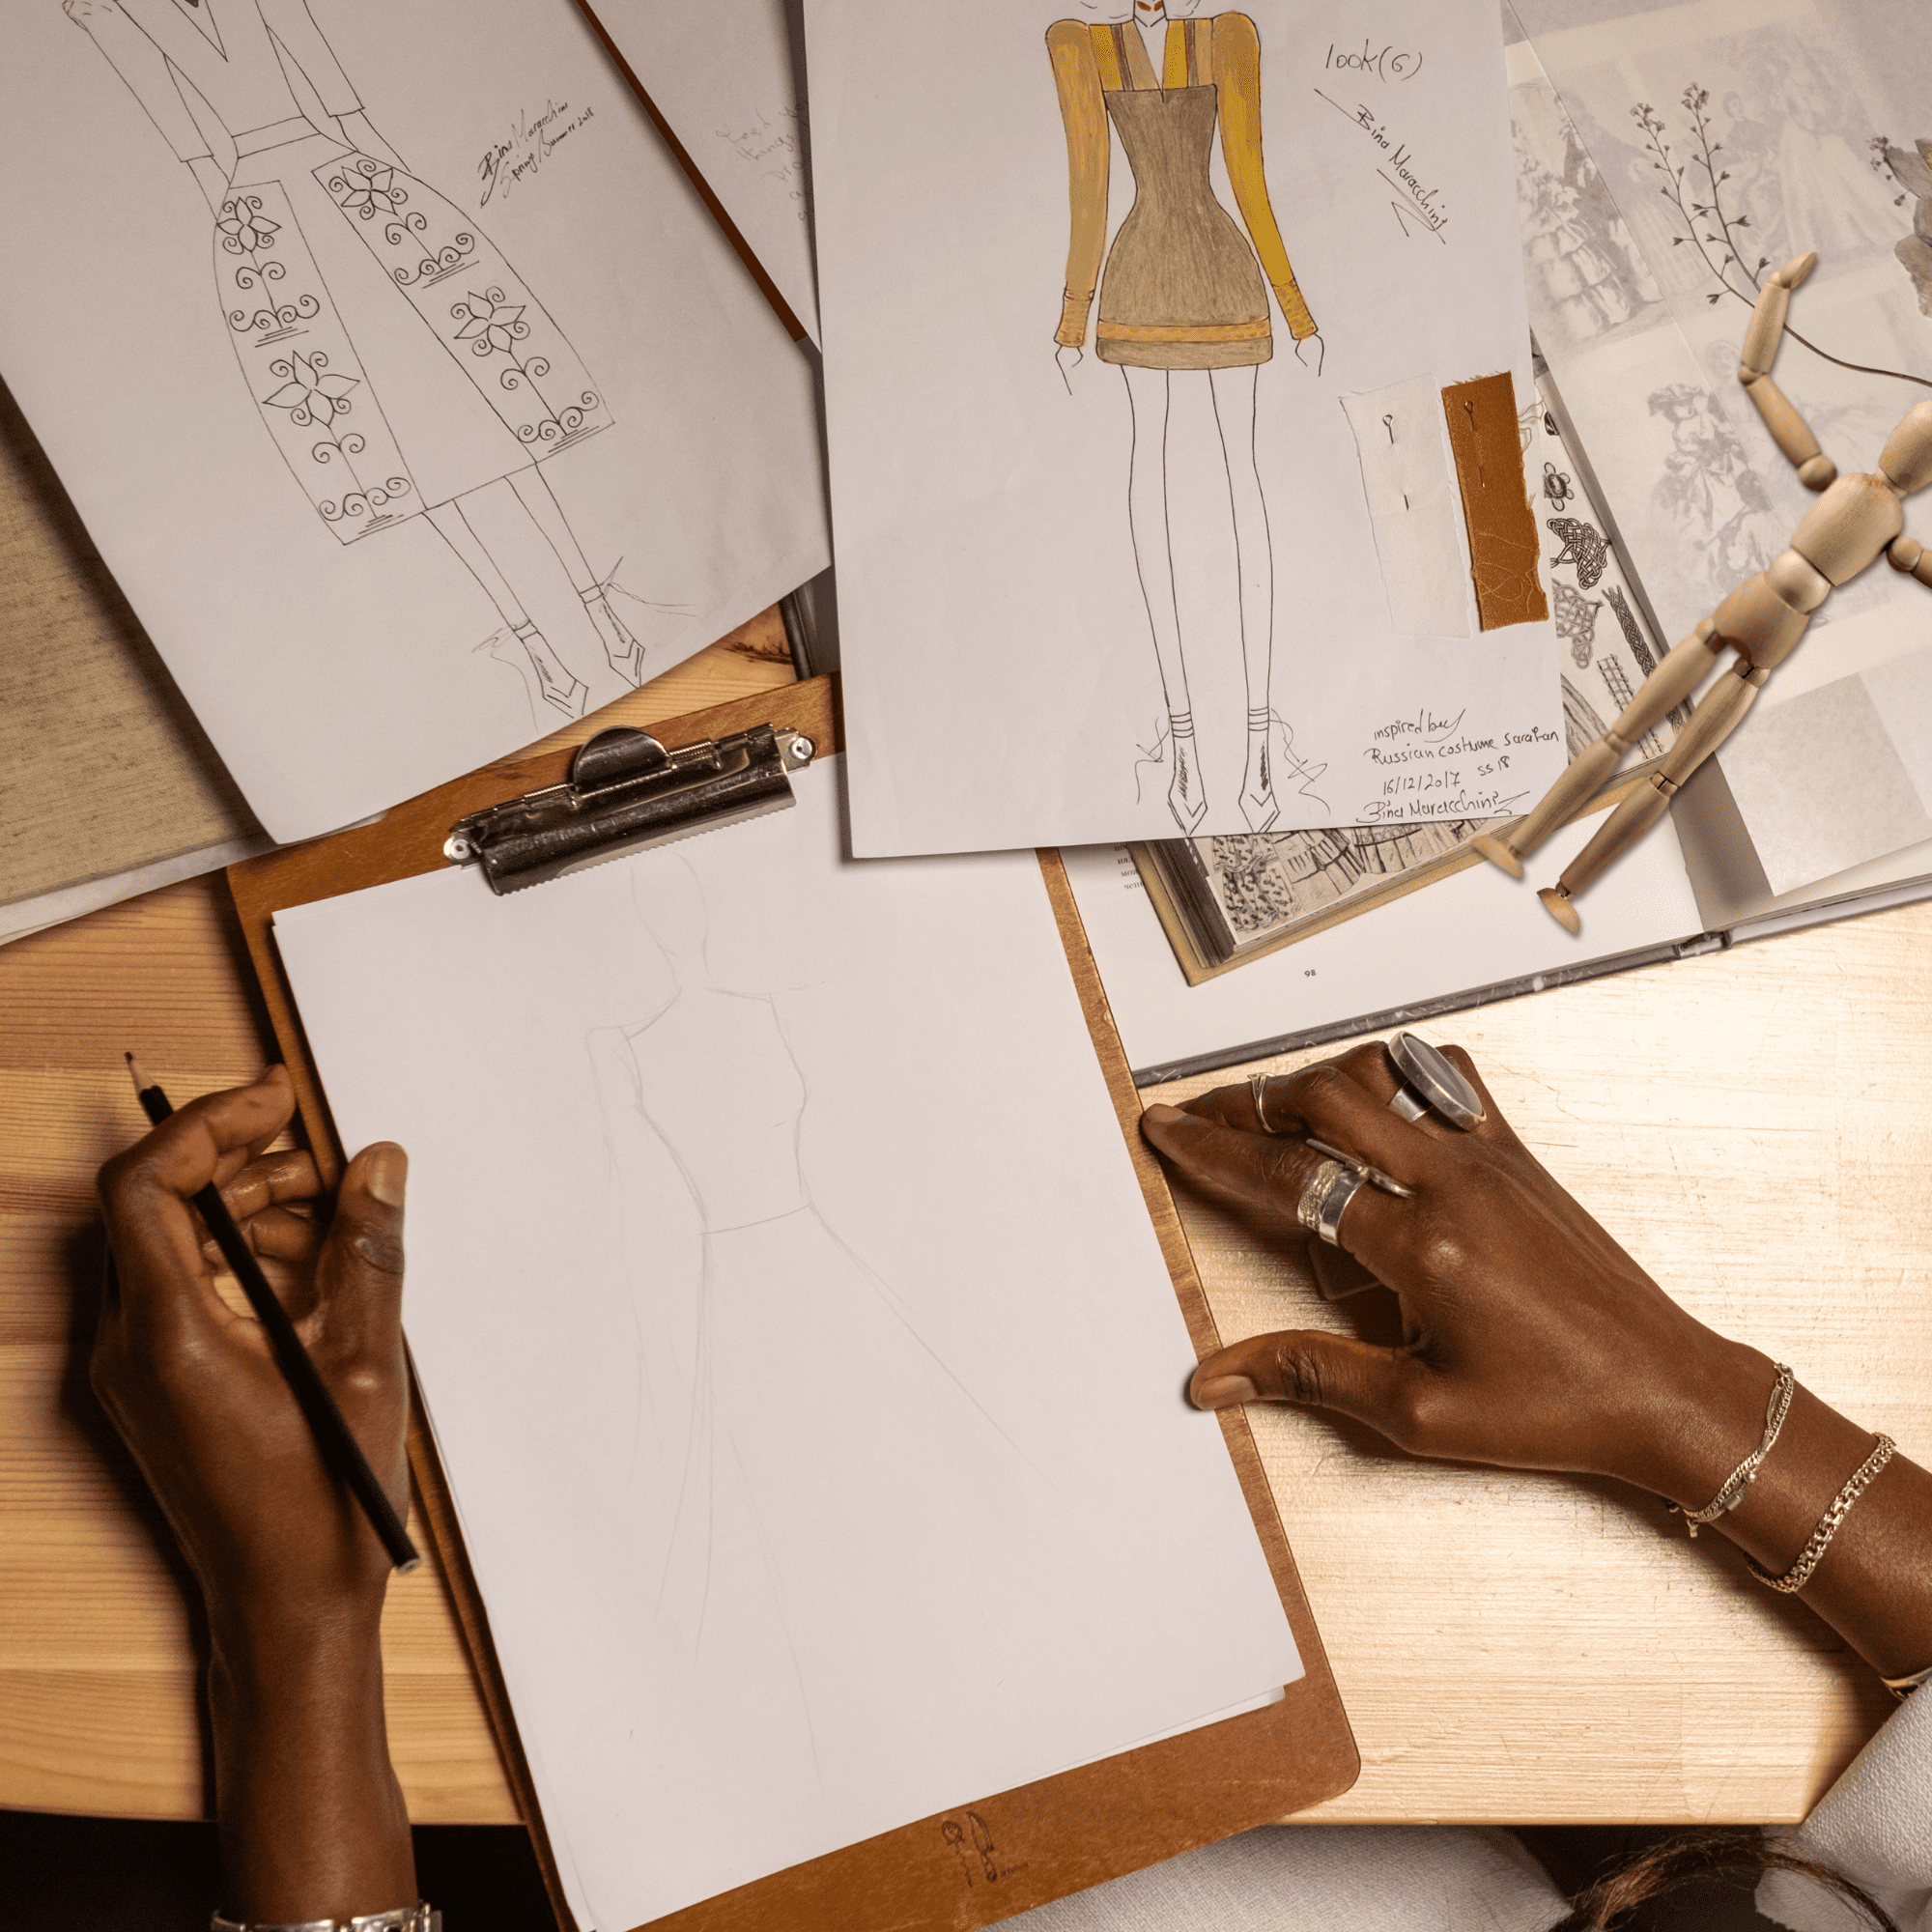 71-Piece Drawing Kit + Art Mannequin